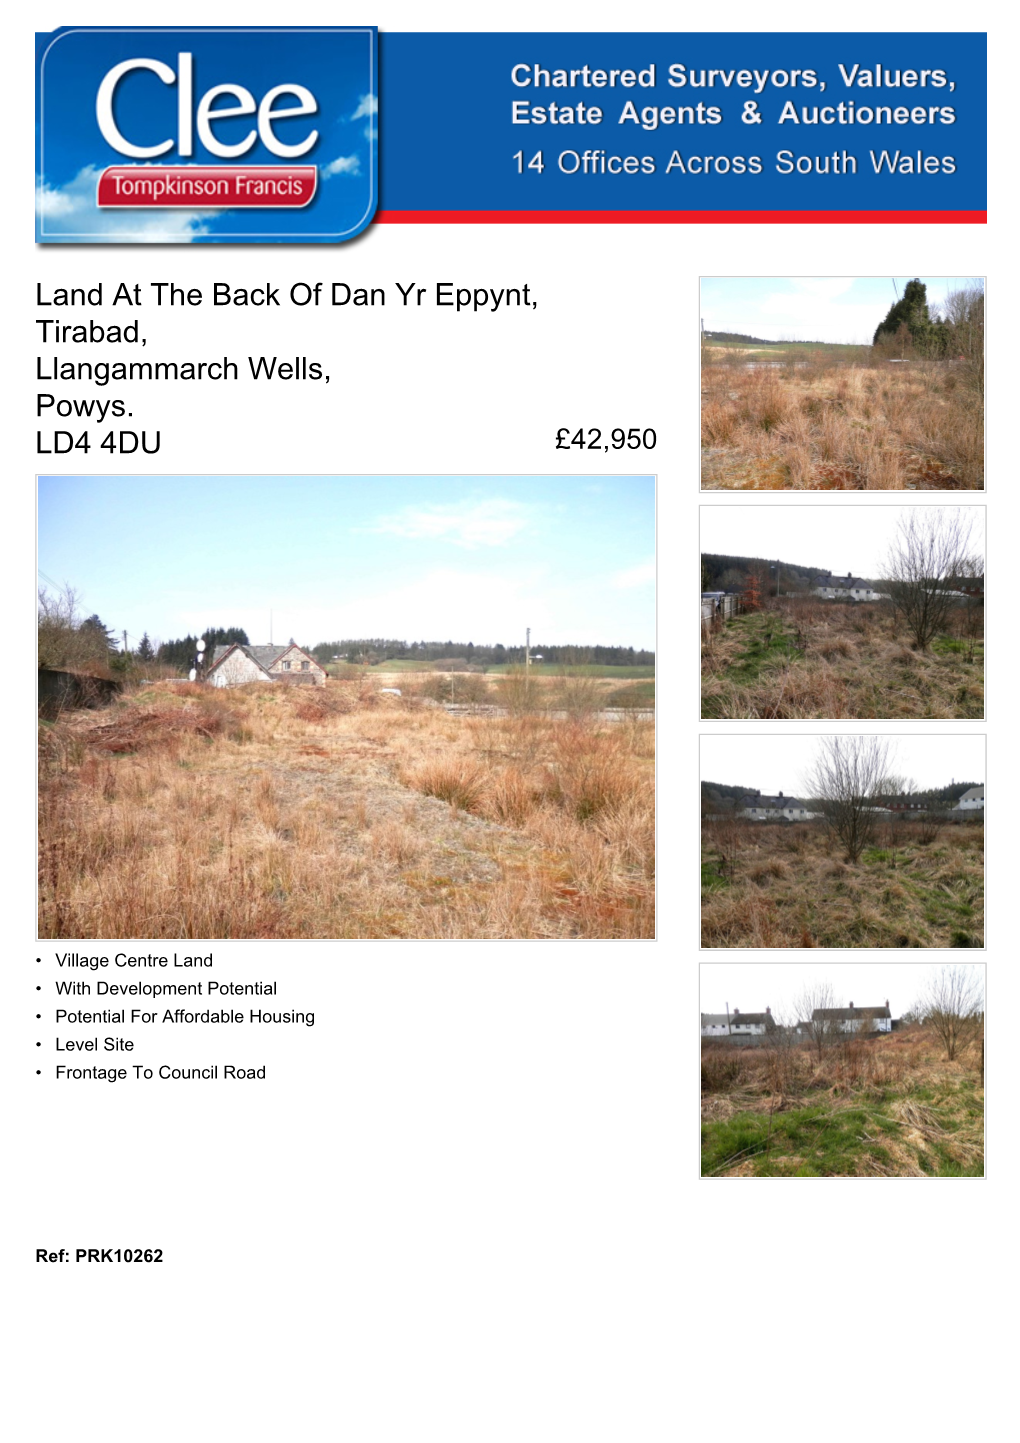 Land at the Back of Dan Yr Eppynt, Tirabad, Llangammarch Wells, Powys